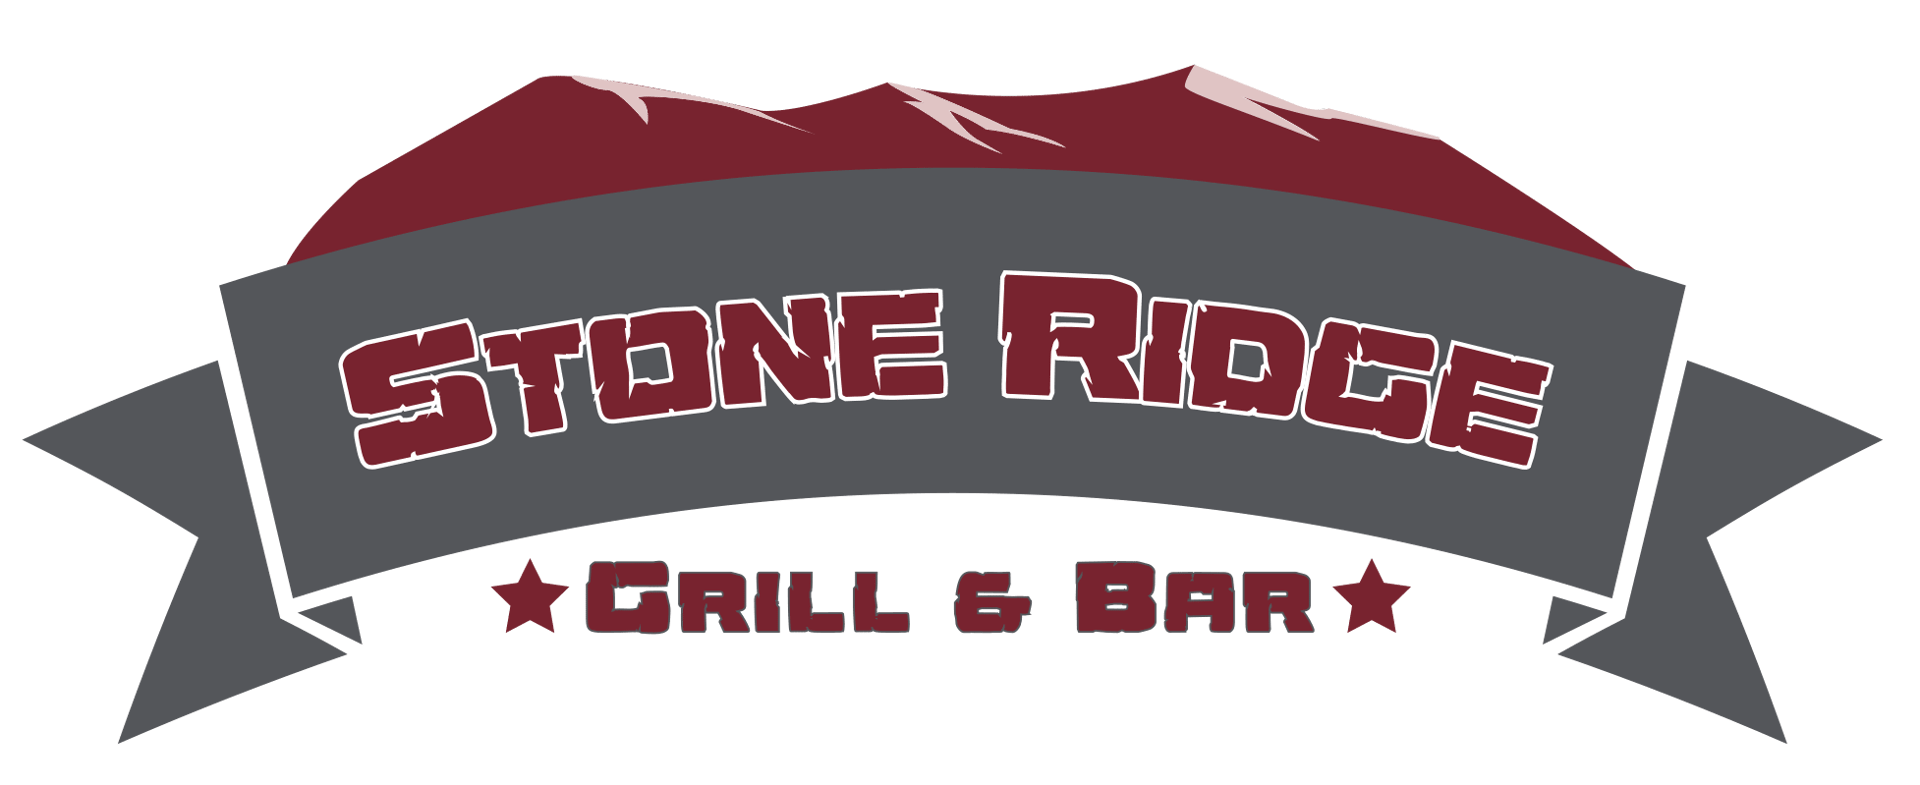 Stone Ridge Grill & Bar logo top